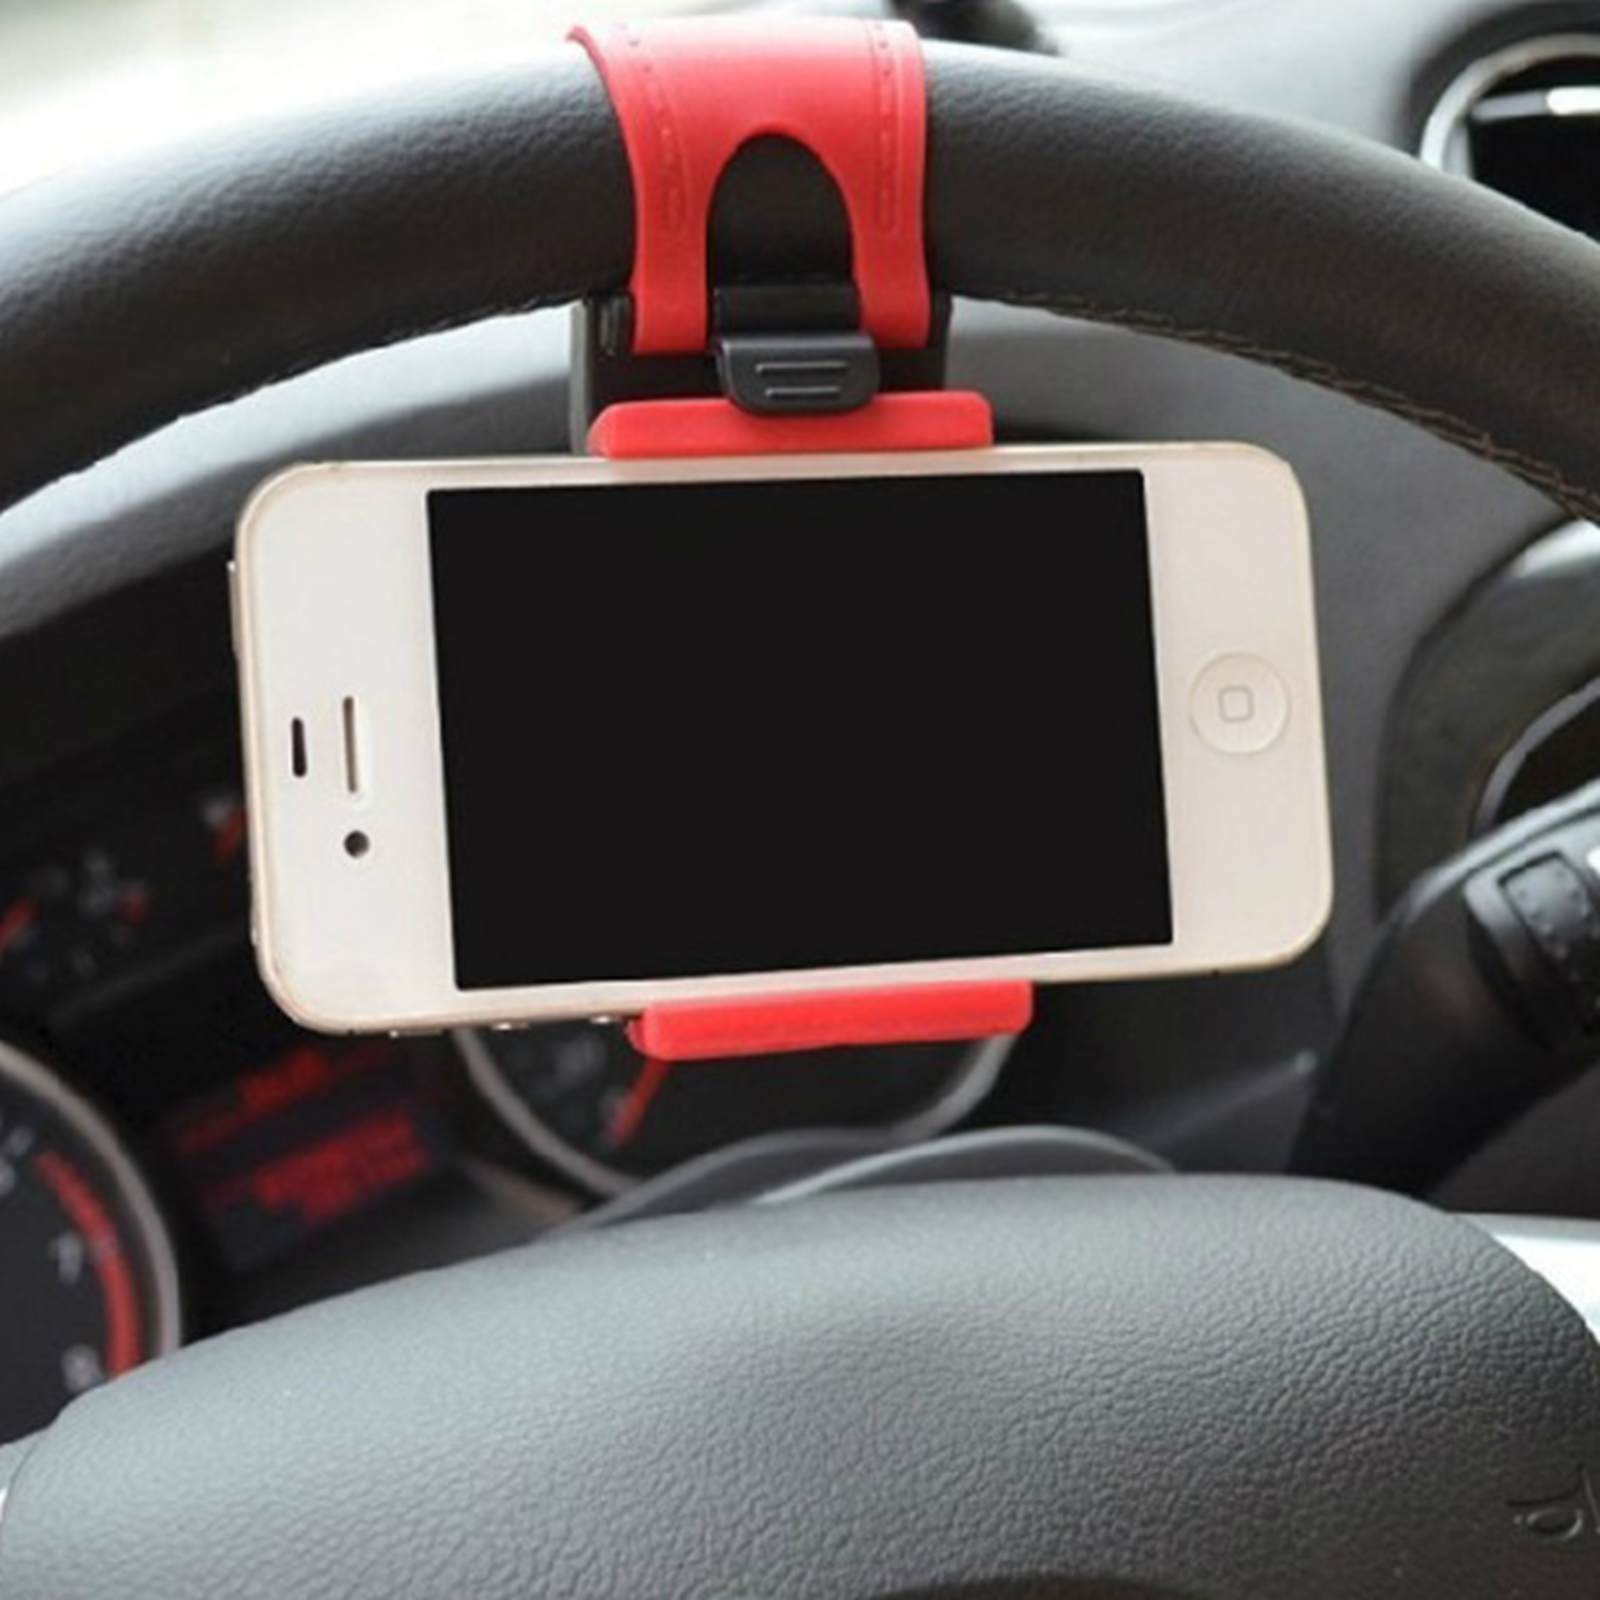 Universal Smartphone Holder For Car